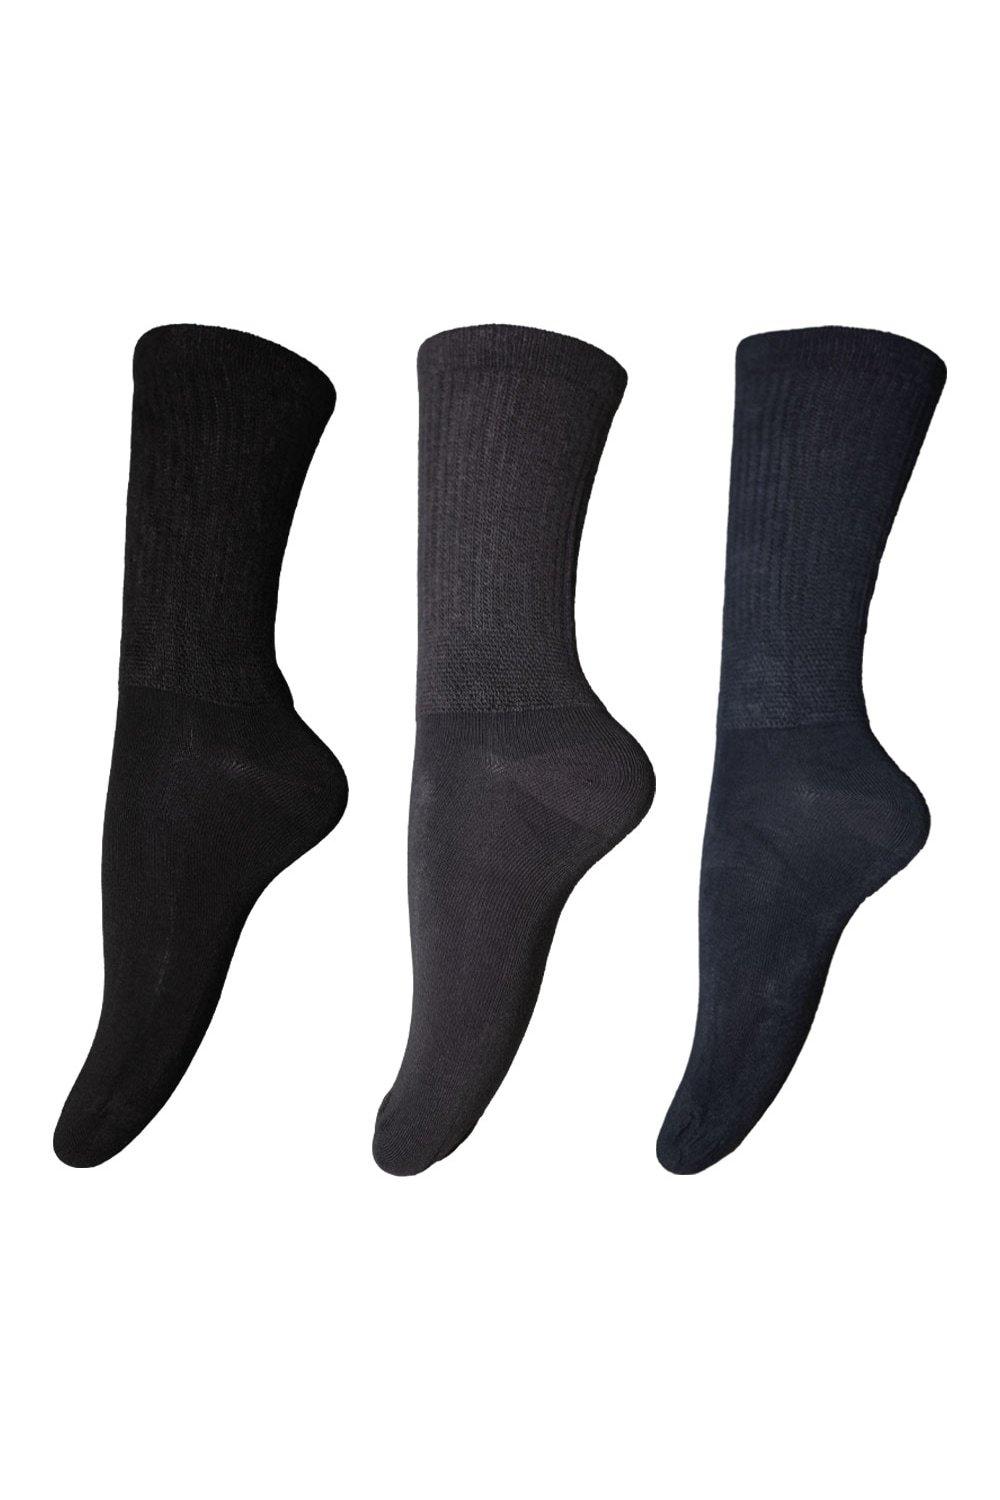 Extra-Wide Comfort Fit Big Foot Socks (3 Pairs)